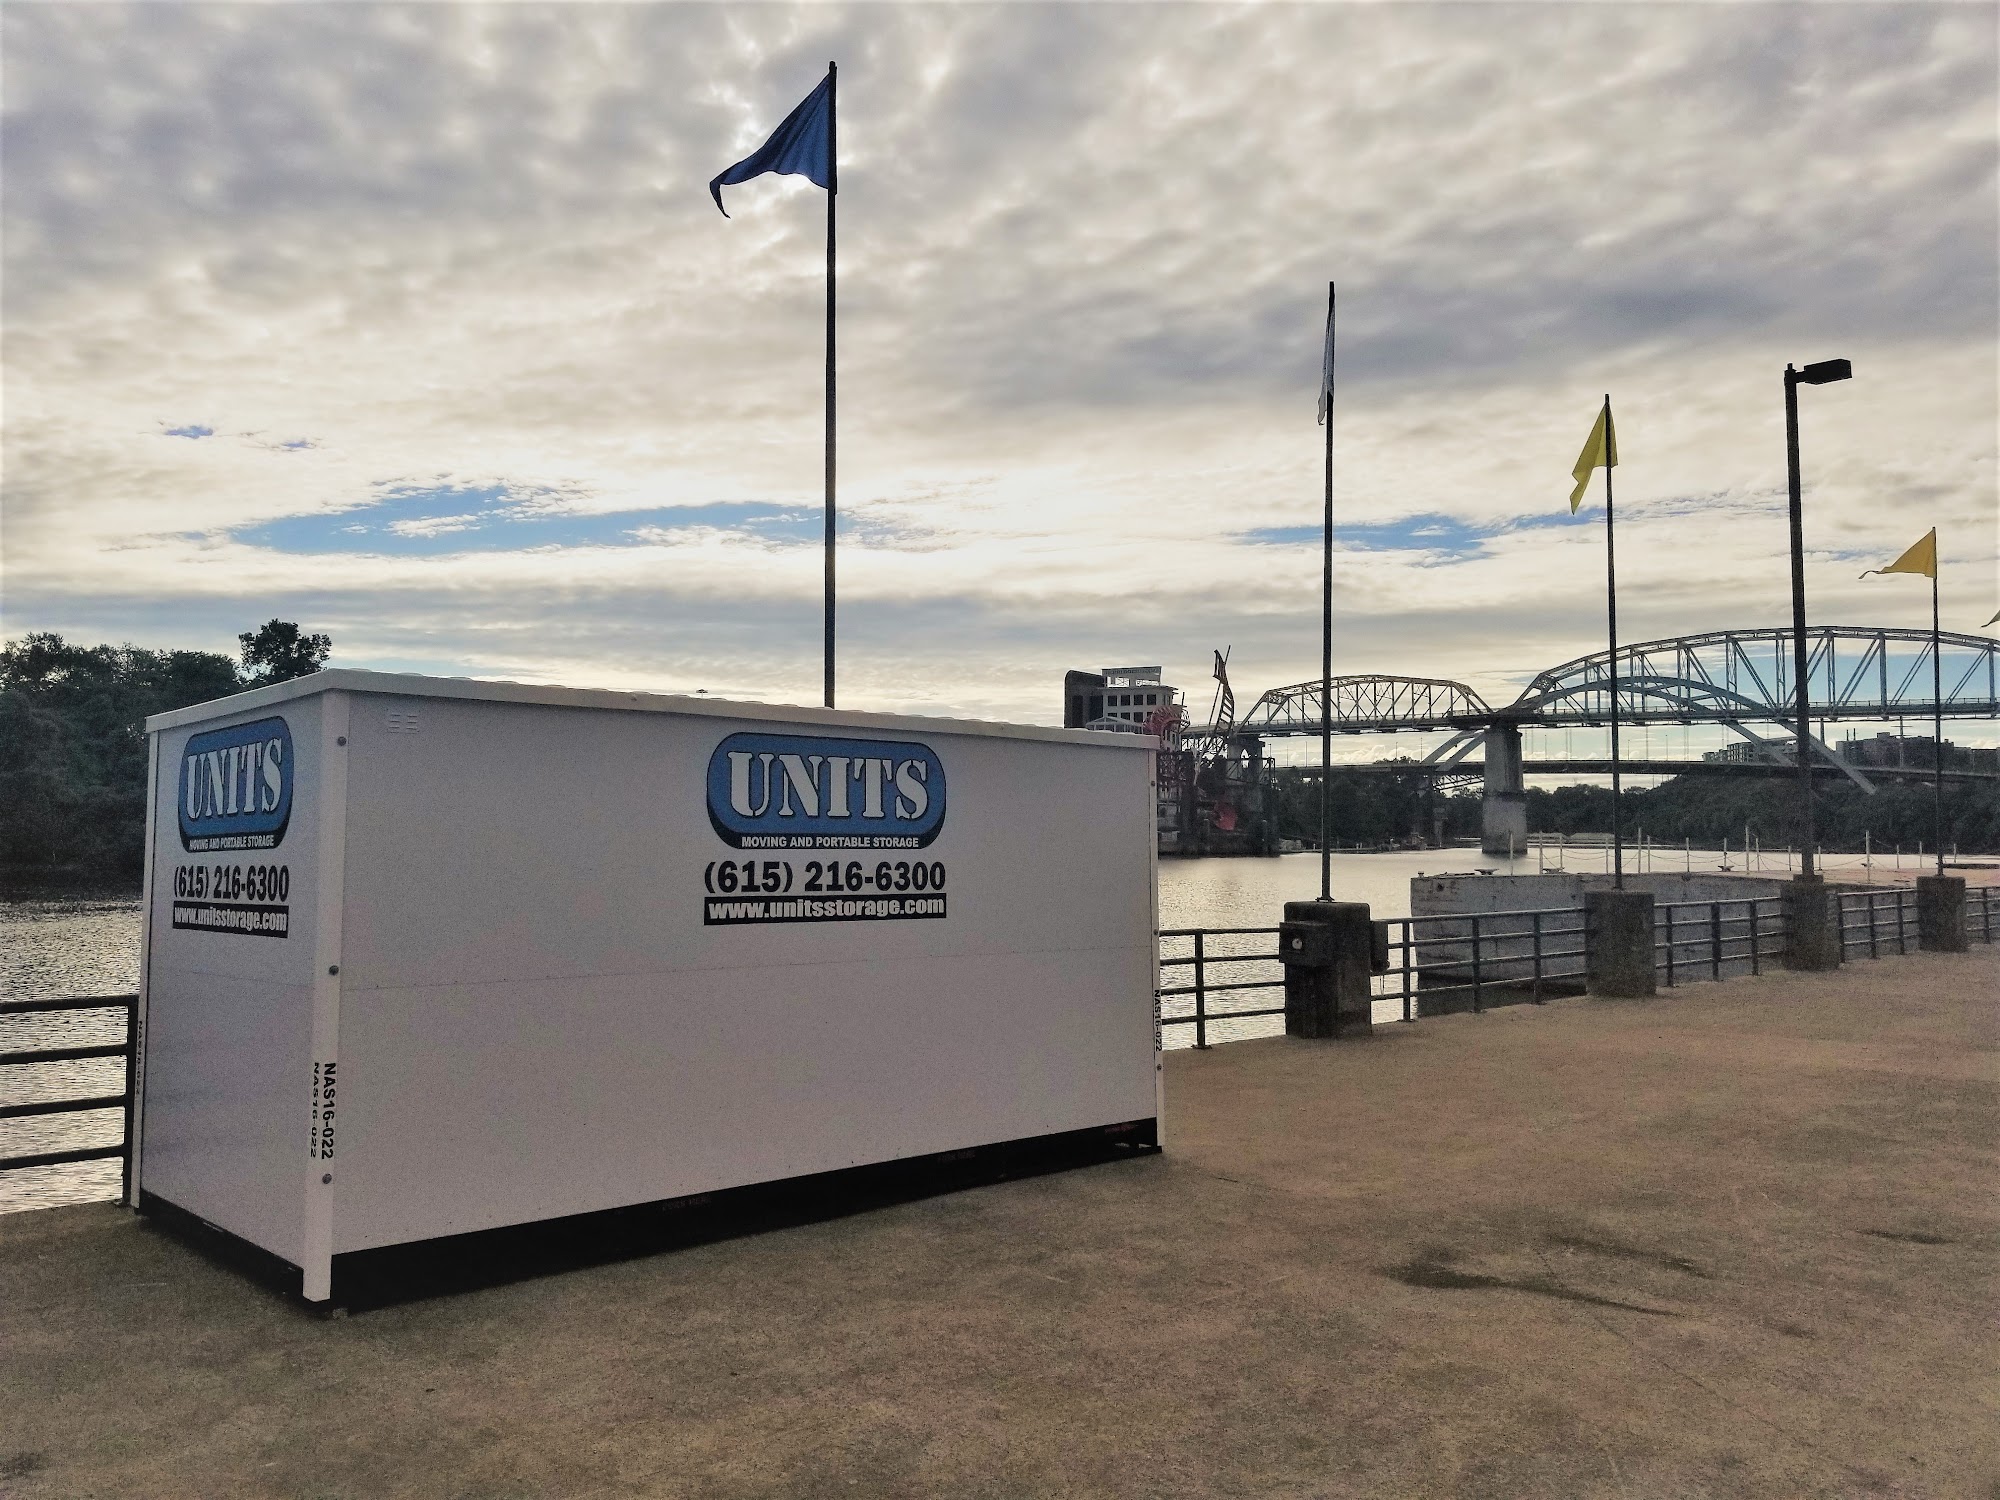 UNITS Moving & Portable Storage of Nashville, TN